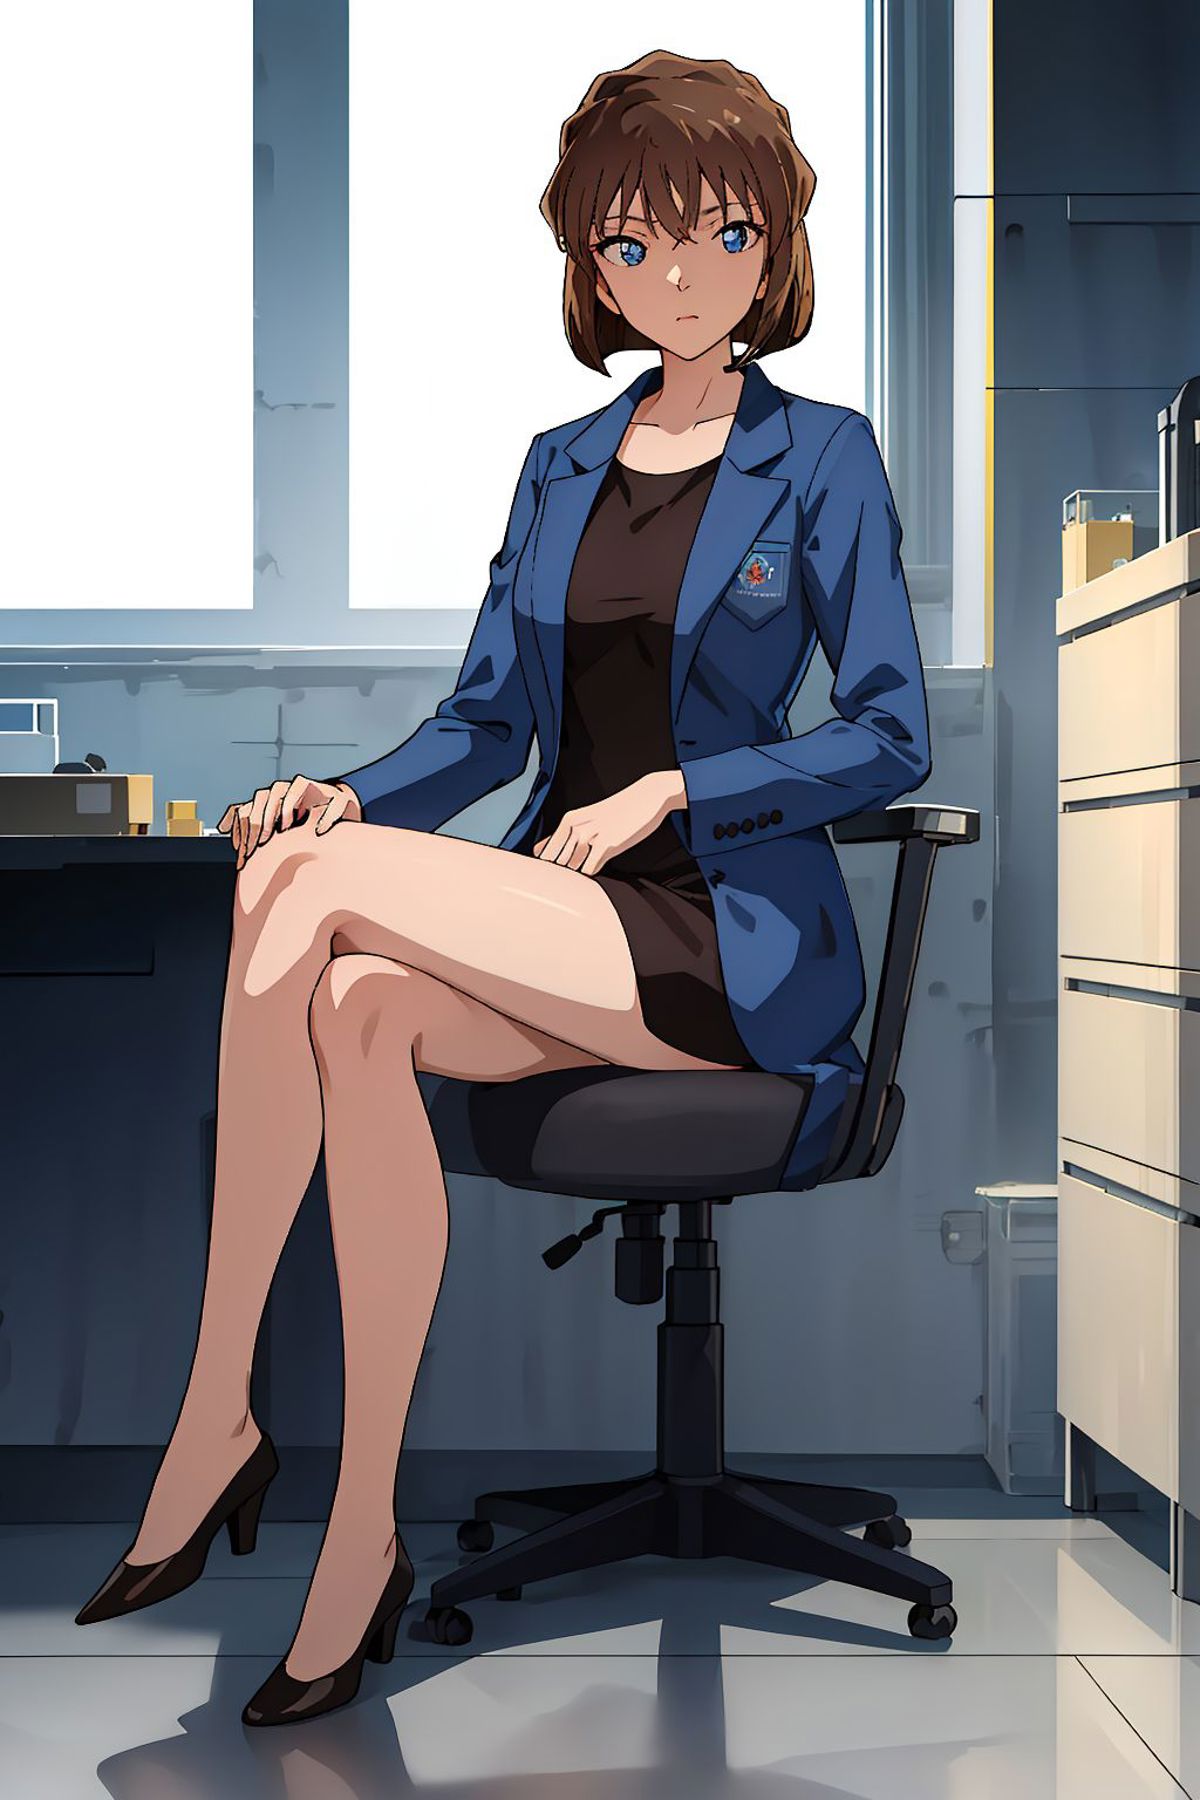 Miyano Shiho/Detective Conan image by ChaosOrchestrator